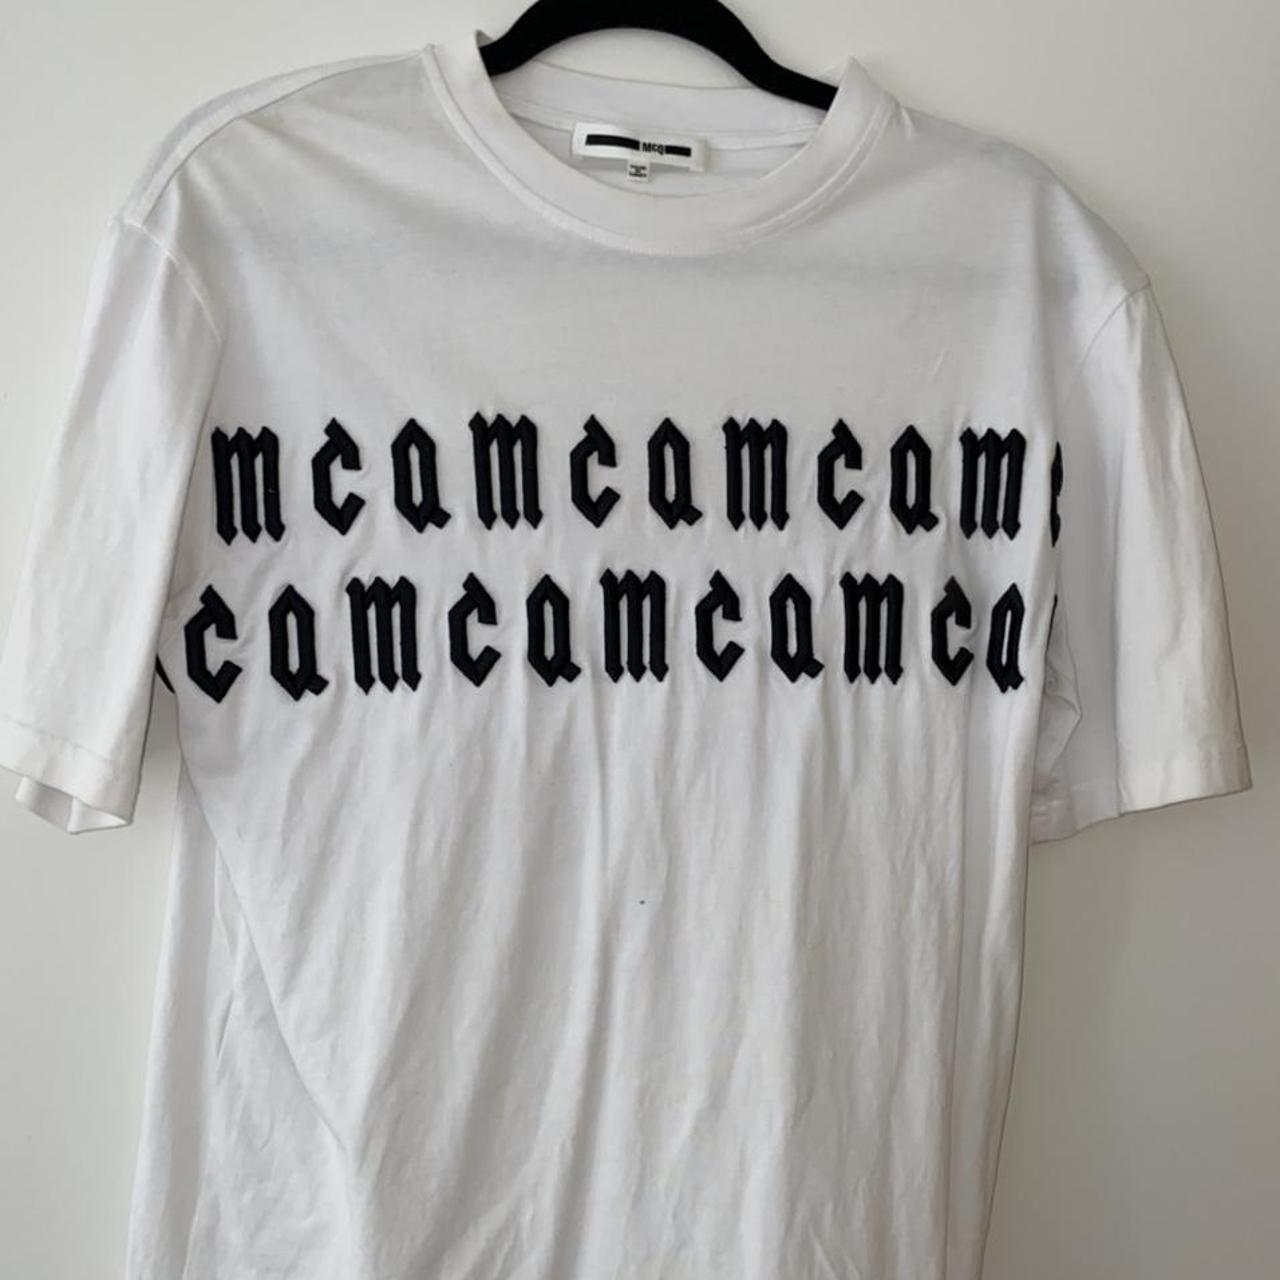 McQ Alexander McQueen Men's Black and White T-shirt